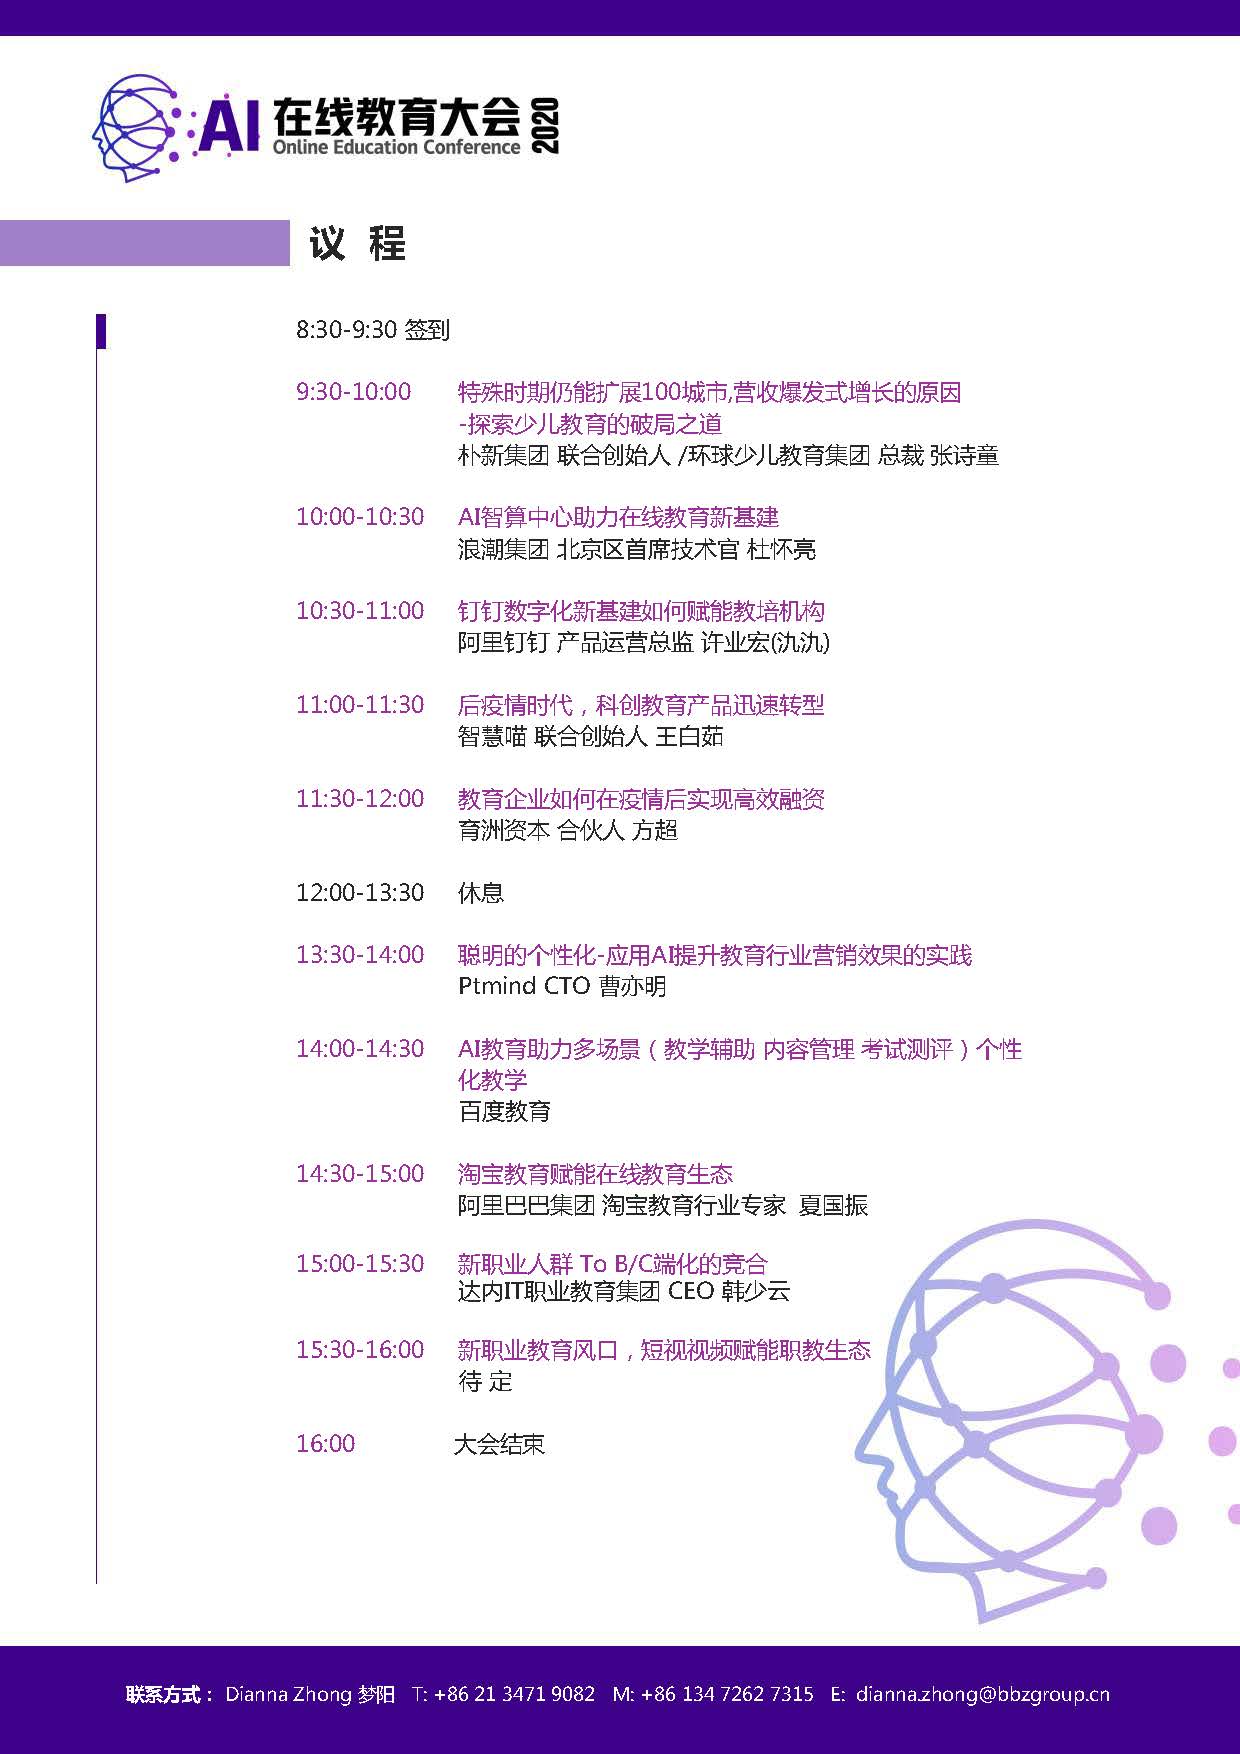 AI在线教育大会 上海 2020.06.17